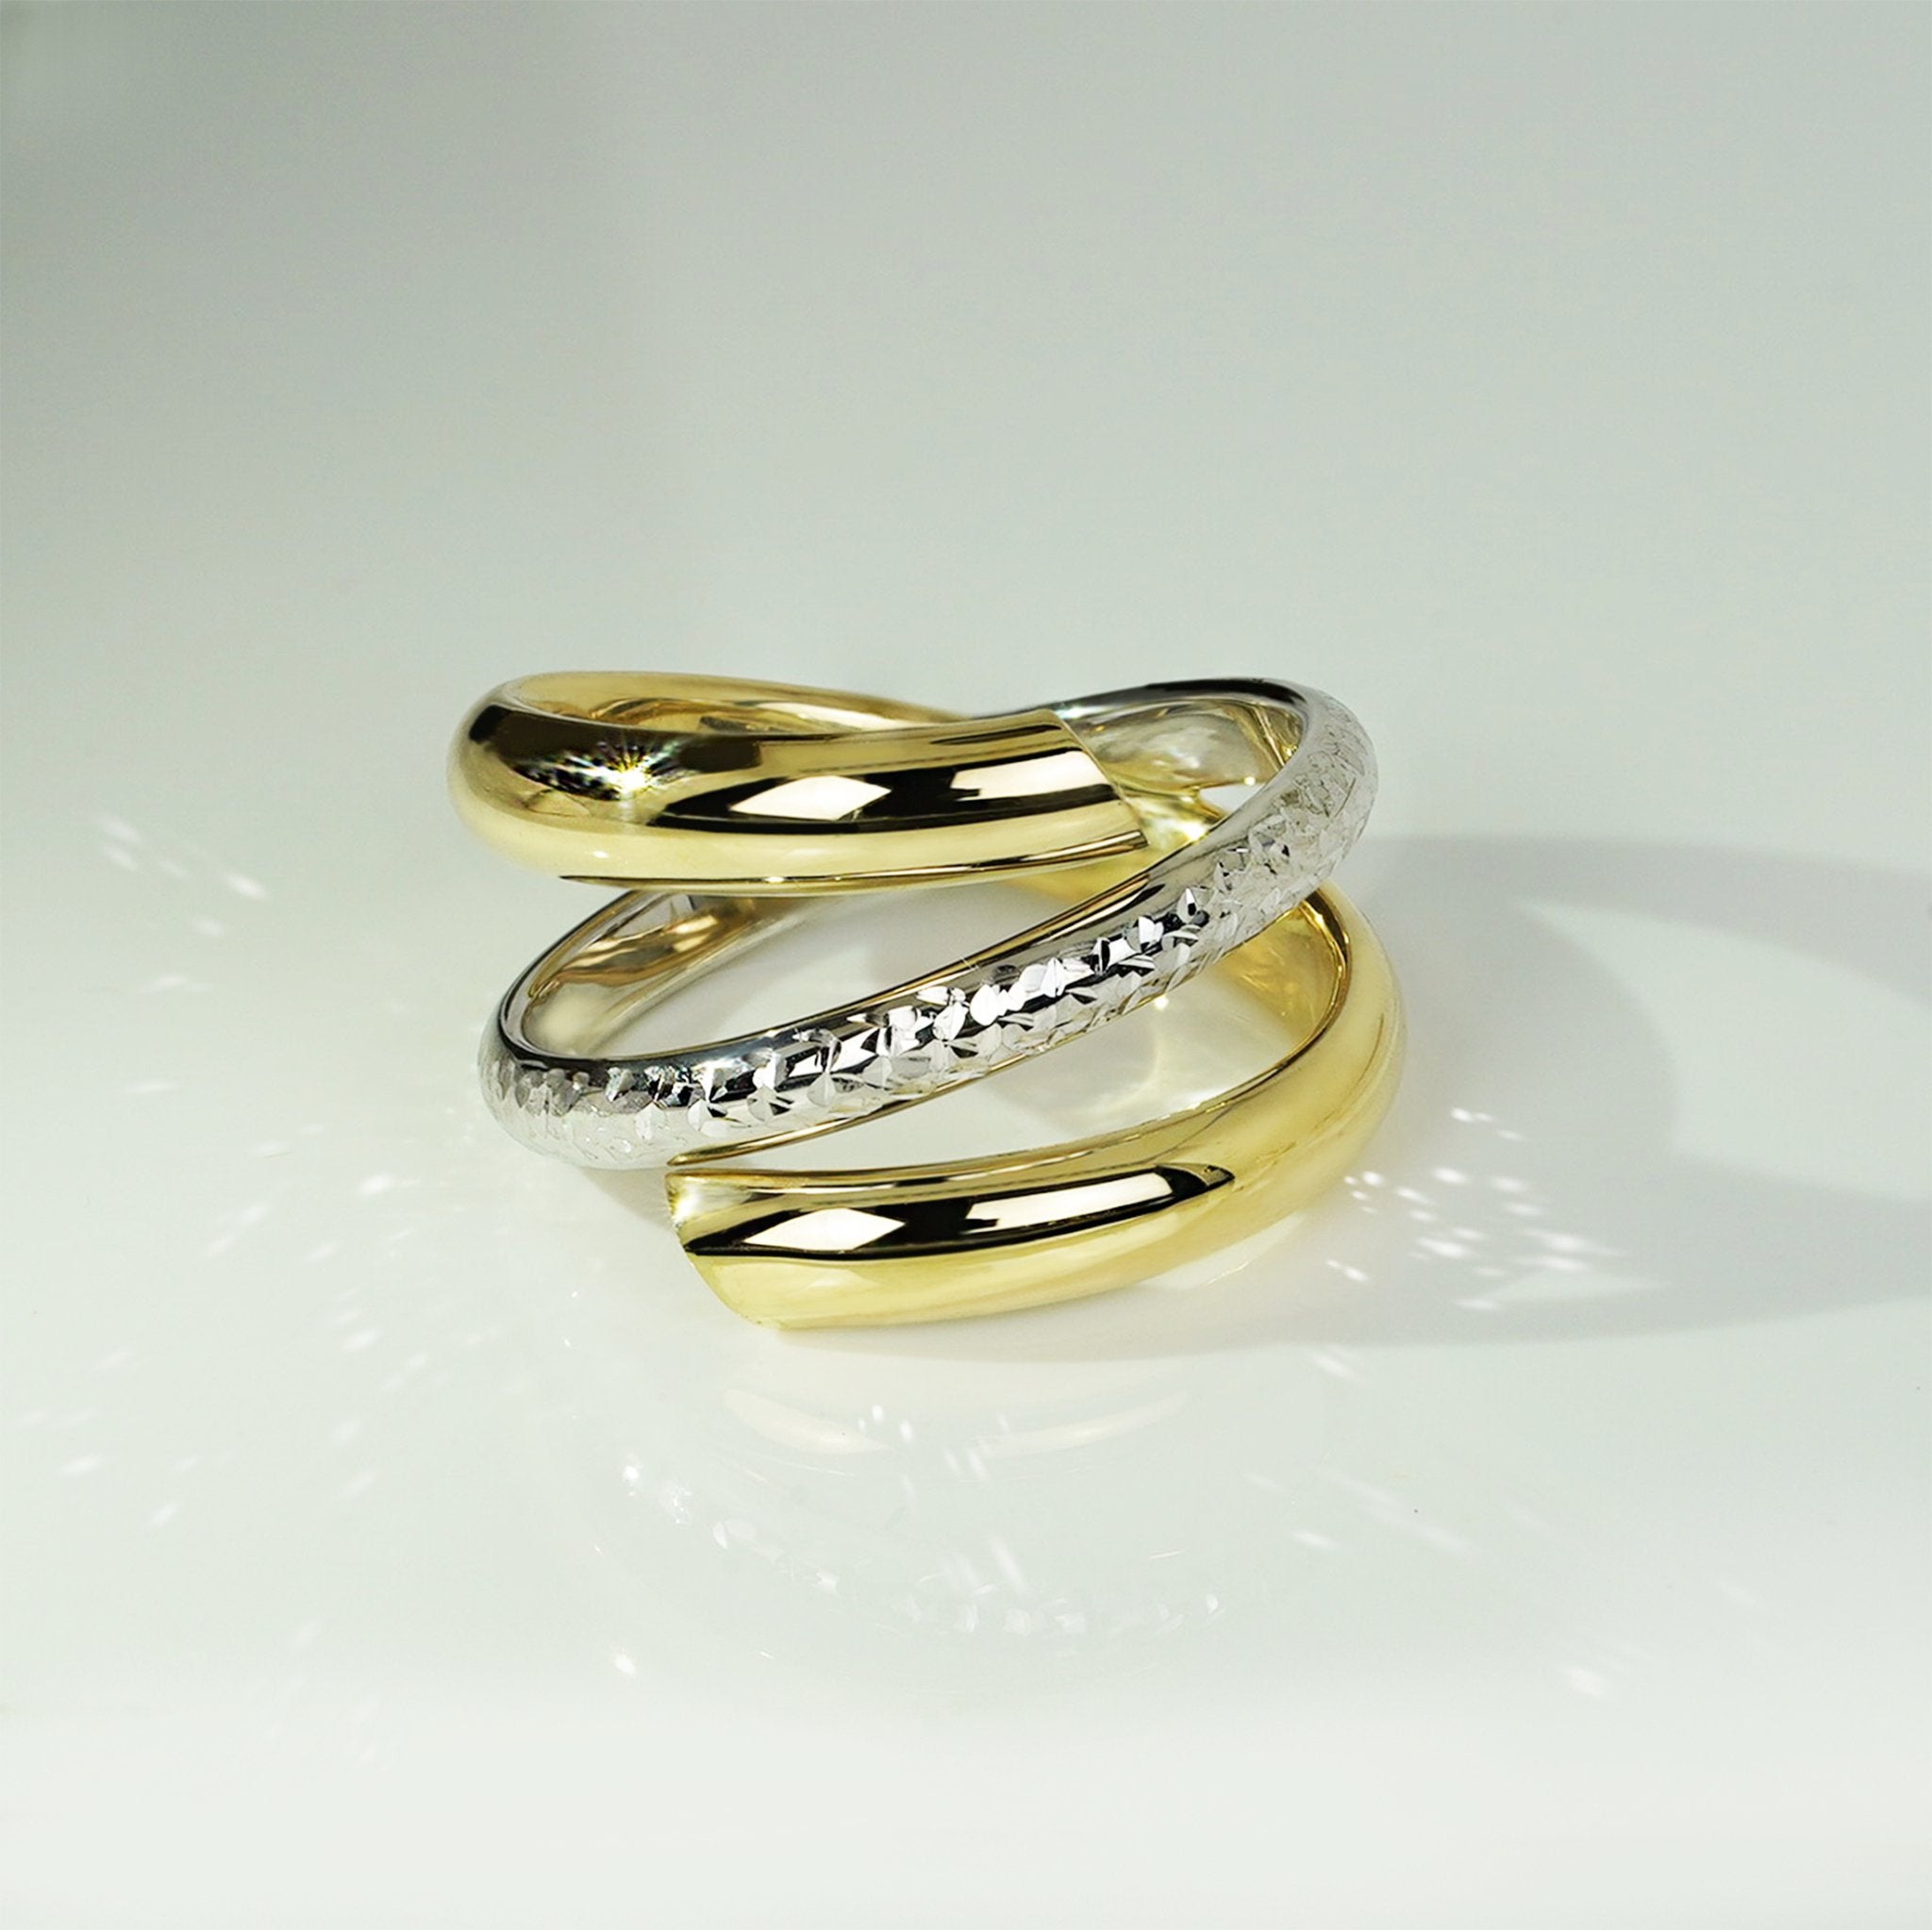 XIAQUJ Couple Princess Cut Diamond Set Ring Fashion Women Engagement  Wedding Jewelry Rings Gold - Walmart.com